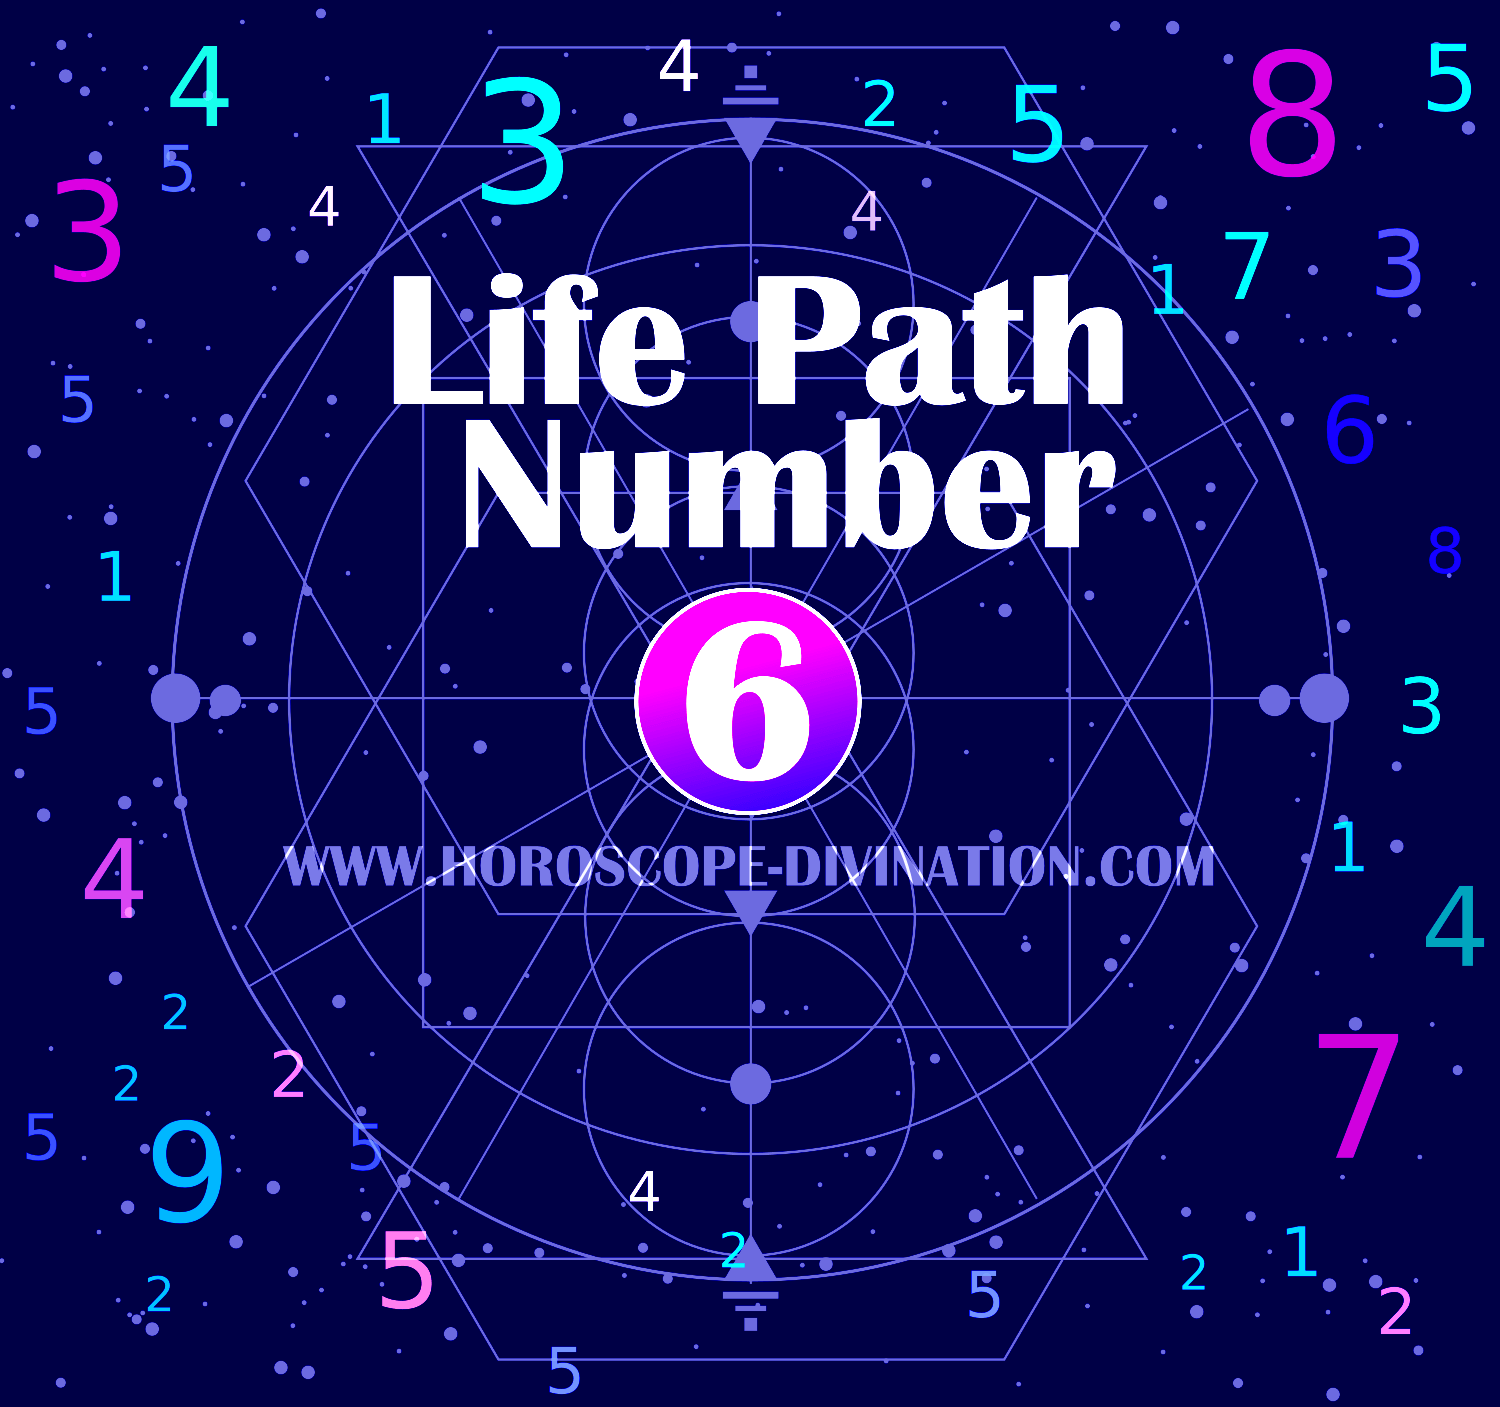 life-path-number-6-humanitarian-numerology